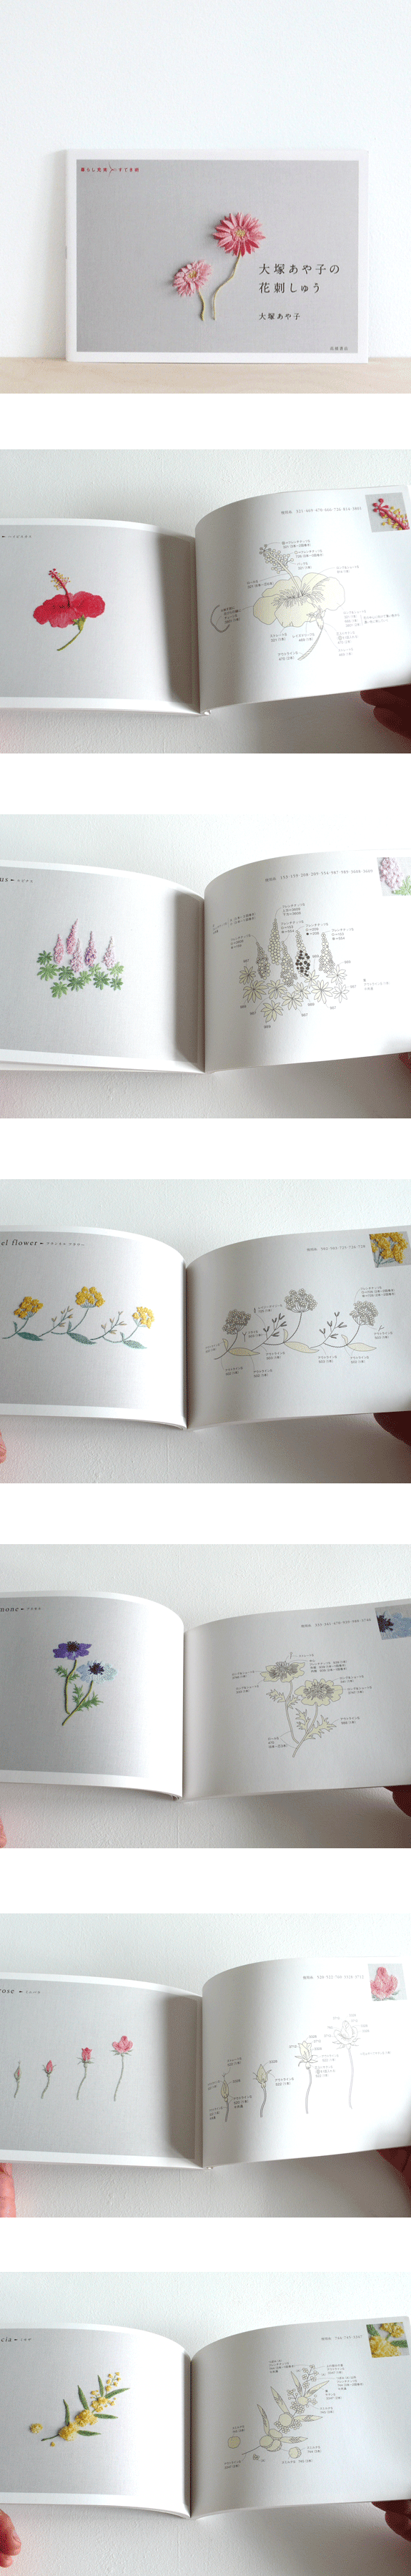 ayako otsuka flower hand embroidery book [floral embroidery, flower pattern embroidery, flower sewing book]